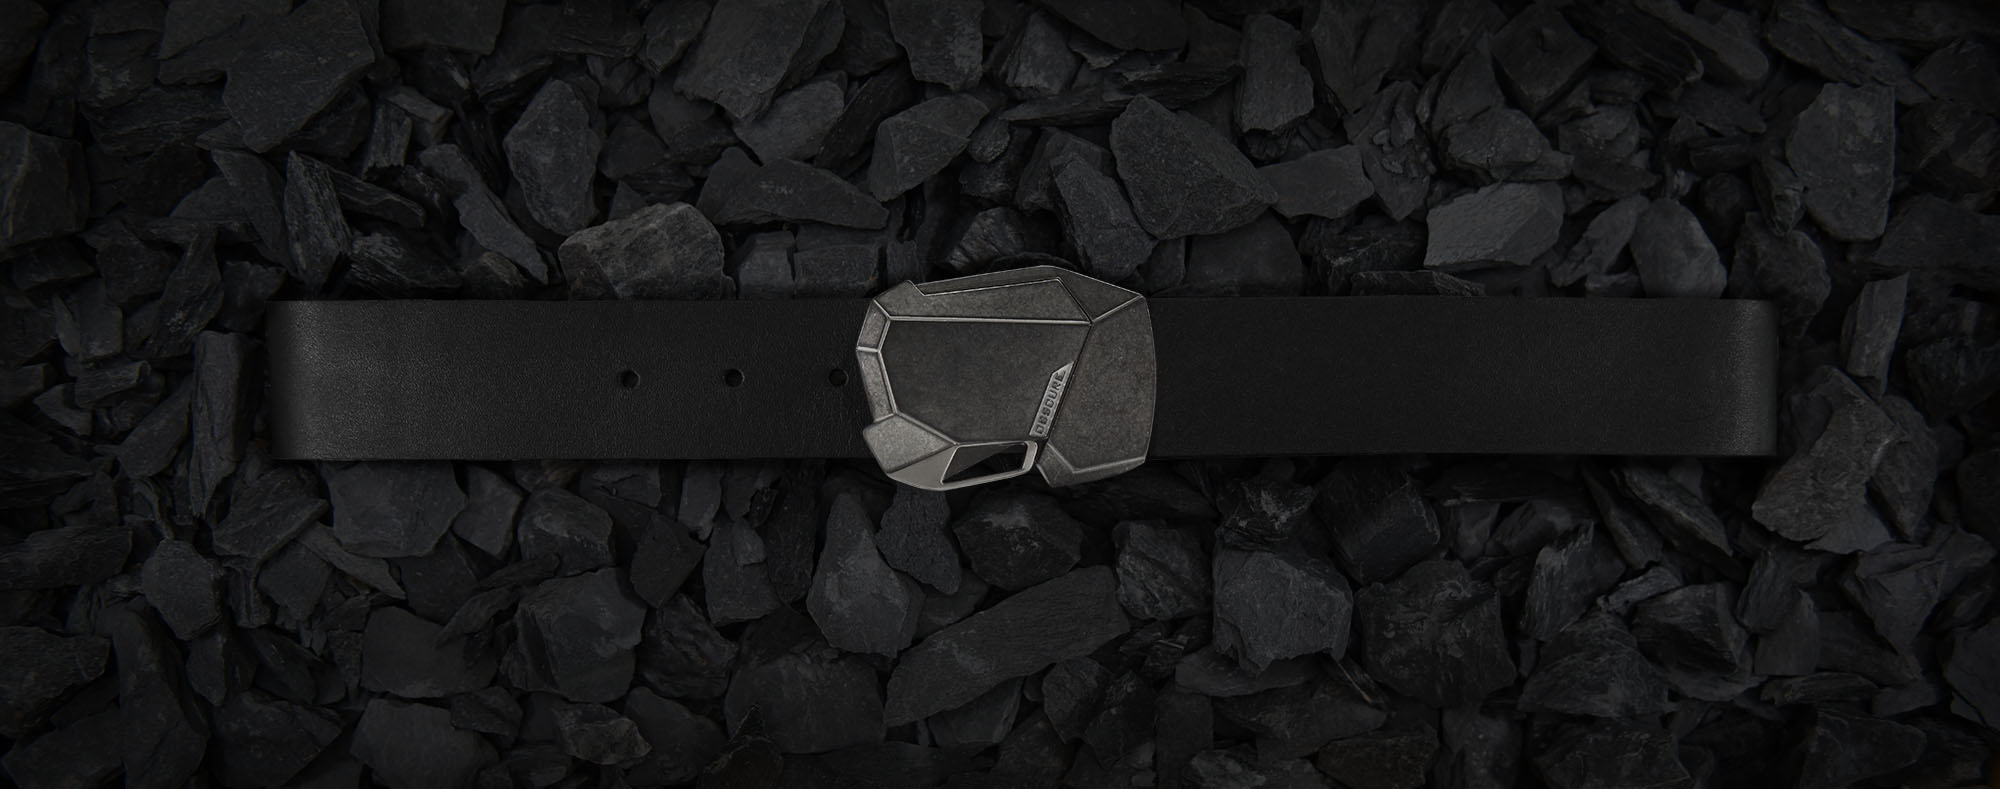 edgy cyberpunk belt buckle on handmade black leather belt on a bed of slate stones